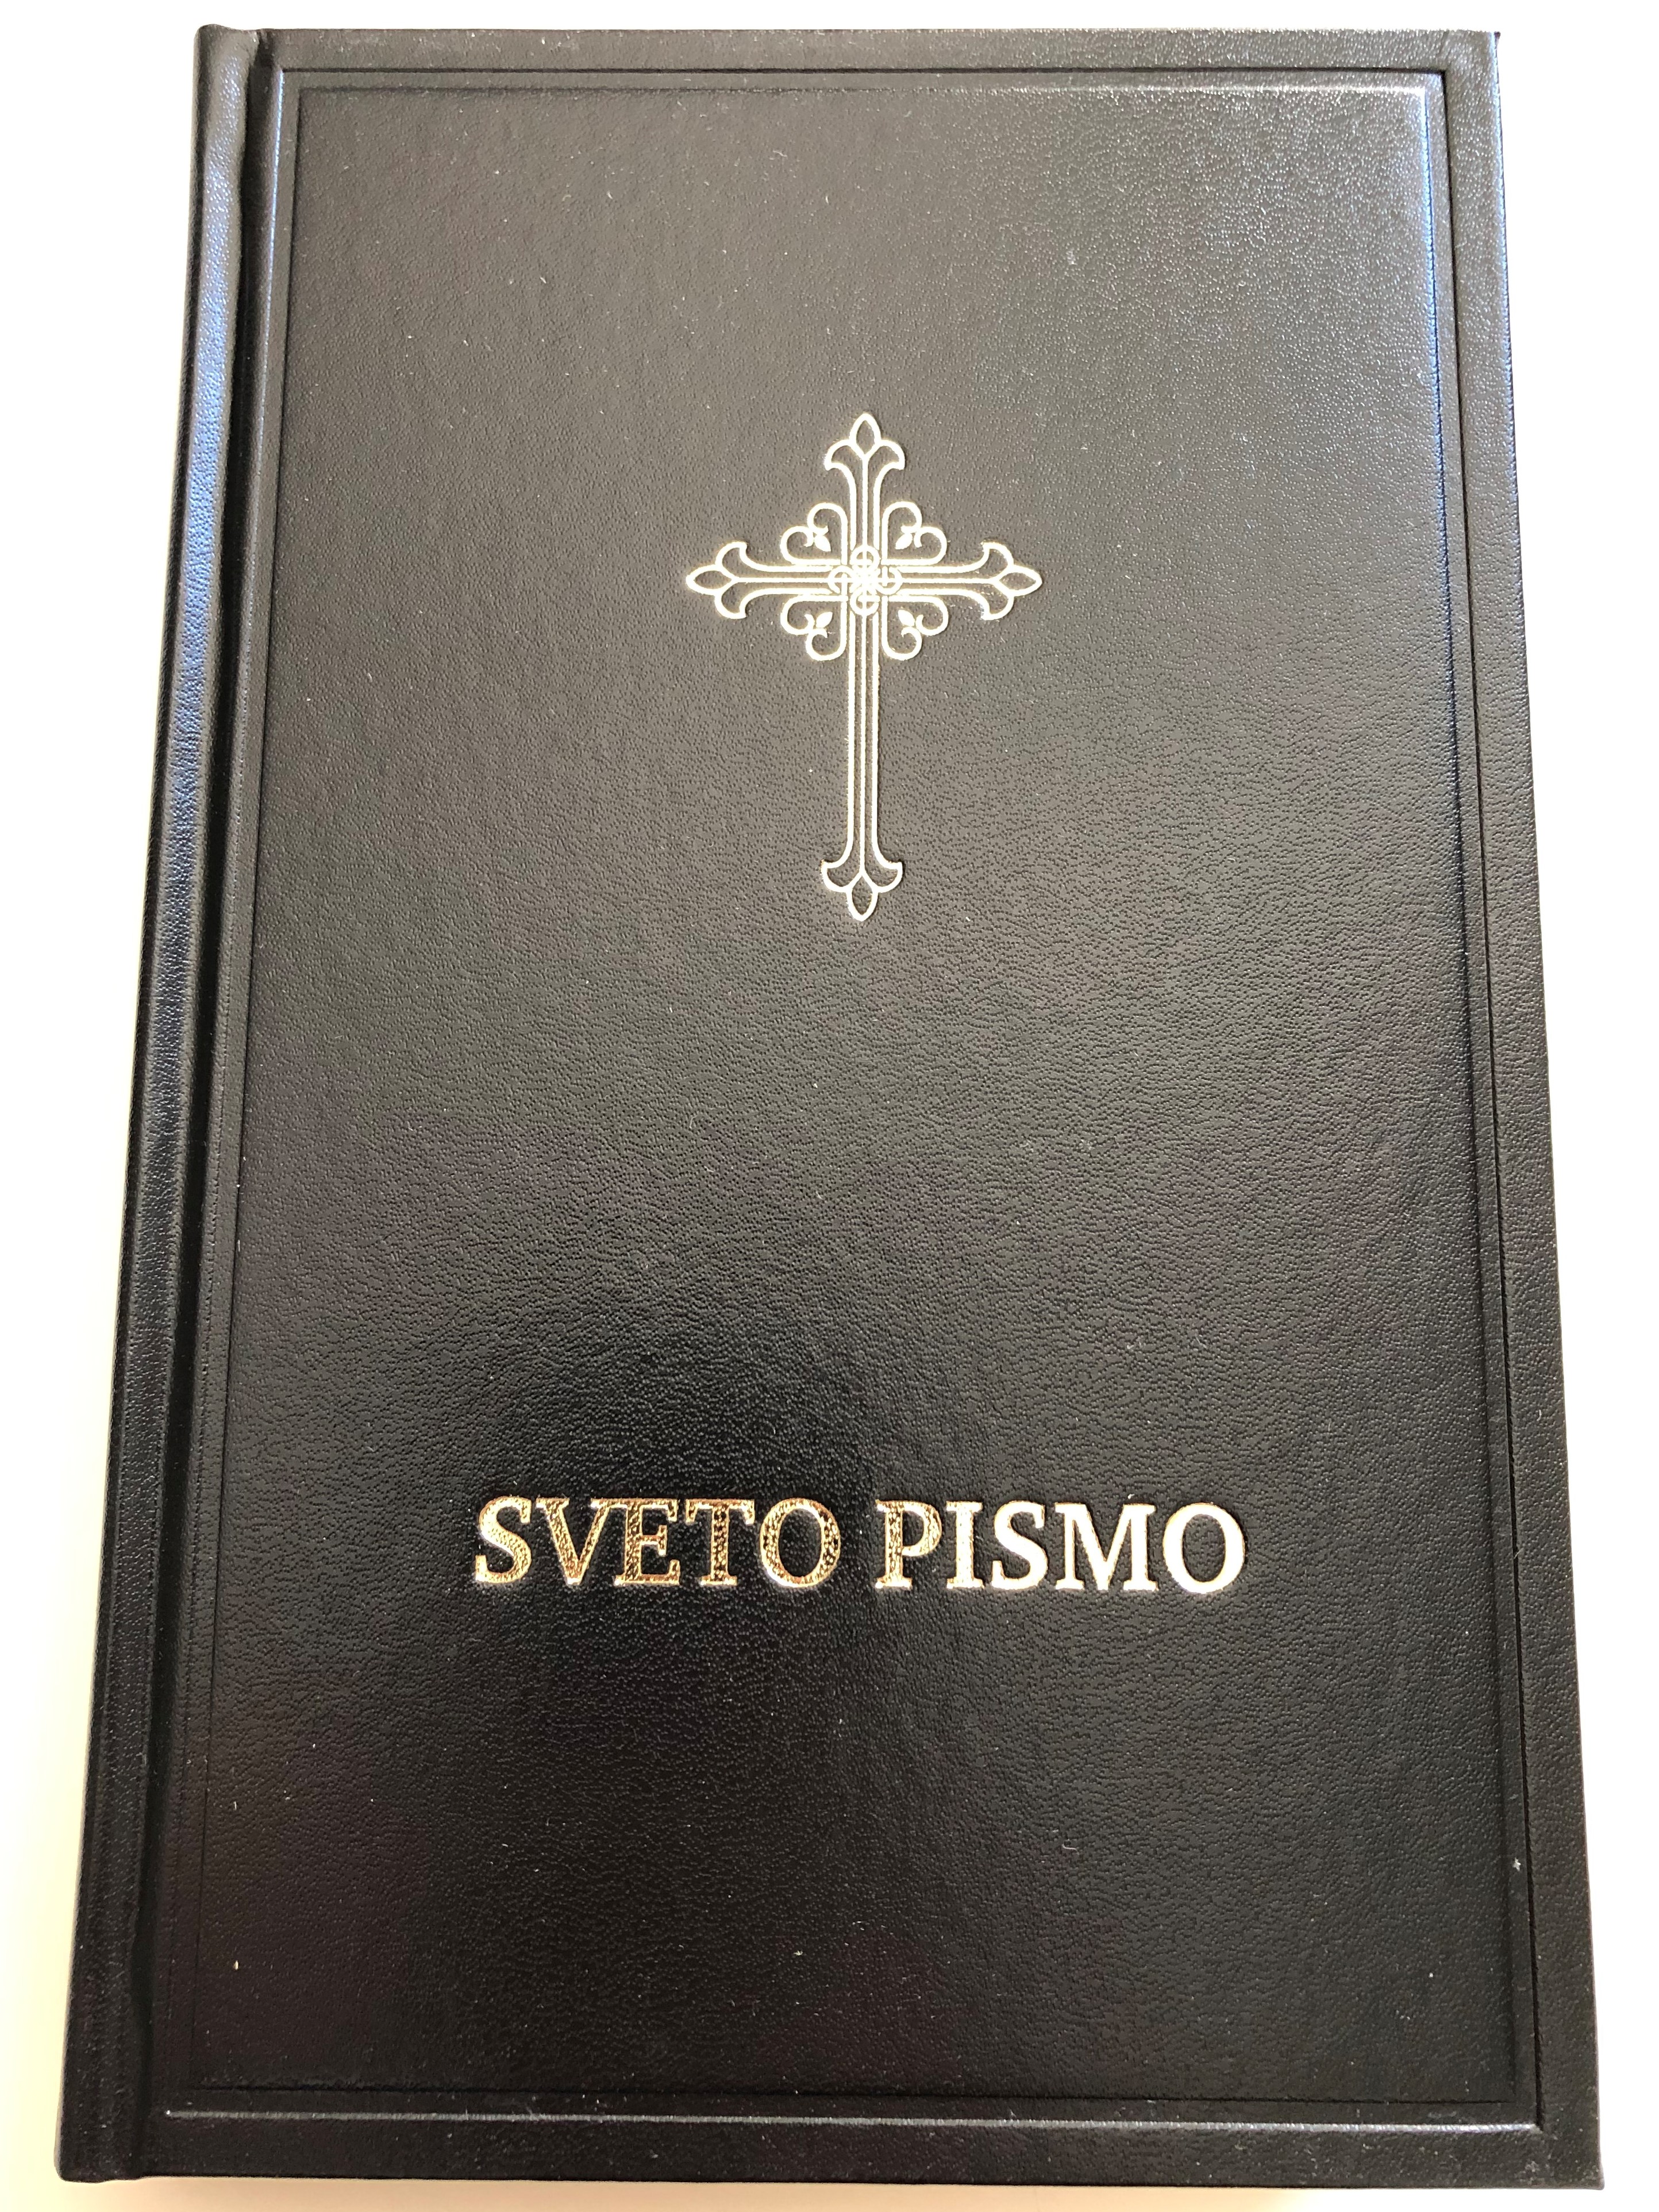 sveto-pismo-serbian-holy-bible-dani-i-karad-i-translation-hardcover-2017-serbian-bible-society-1.jpg